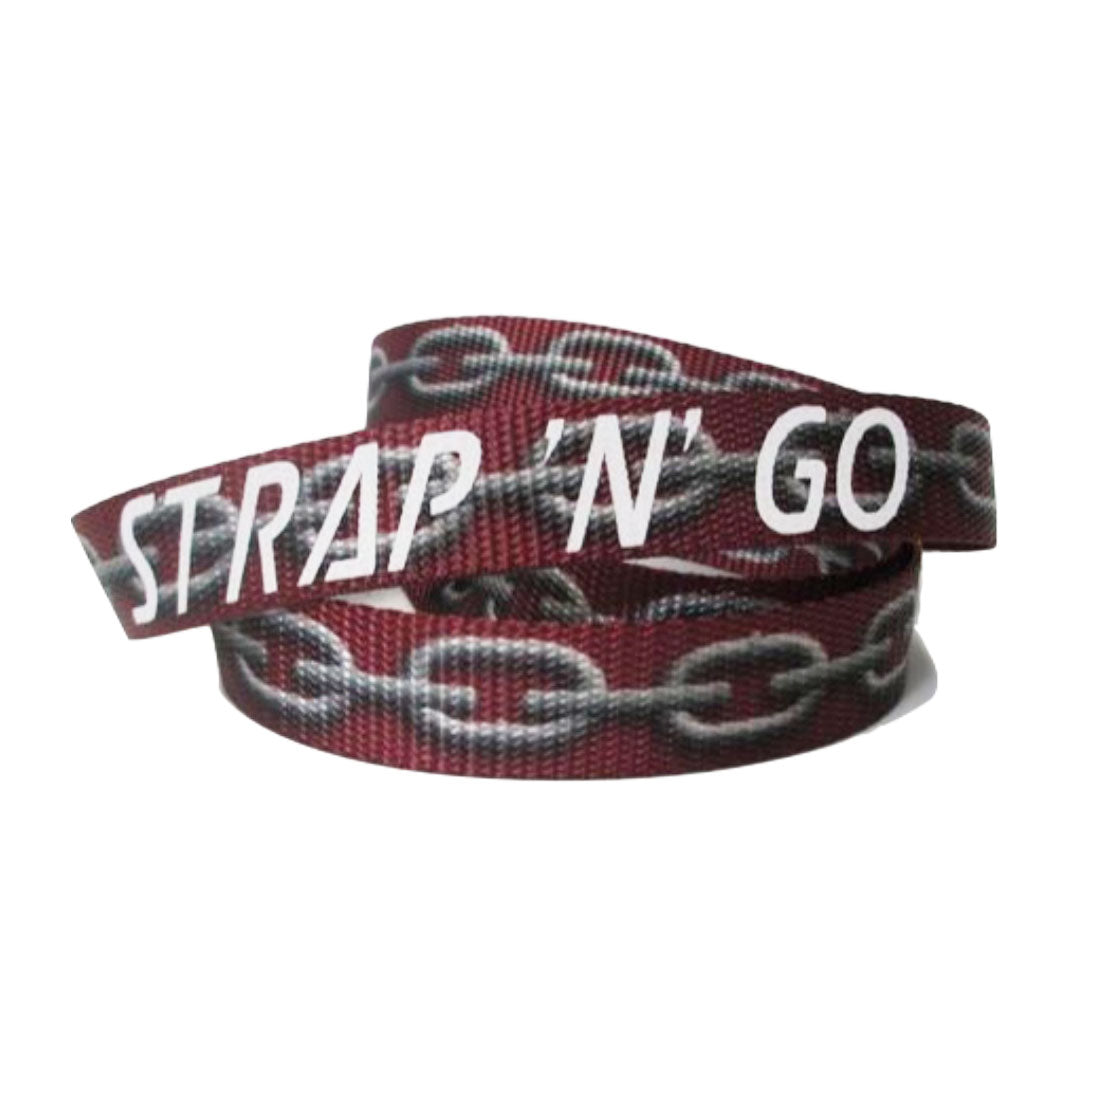 Strap N Go Skate Noose/Leash - Patterns Chain Roller Skate Accessories